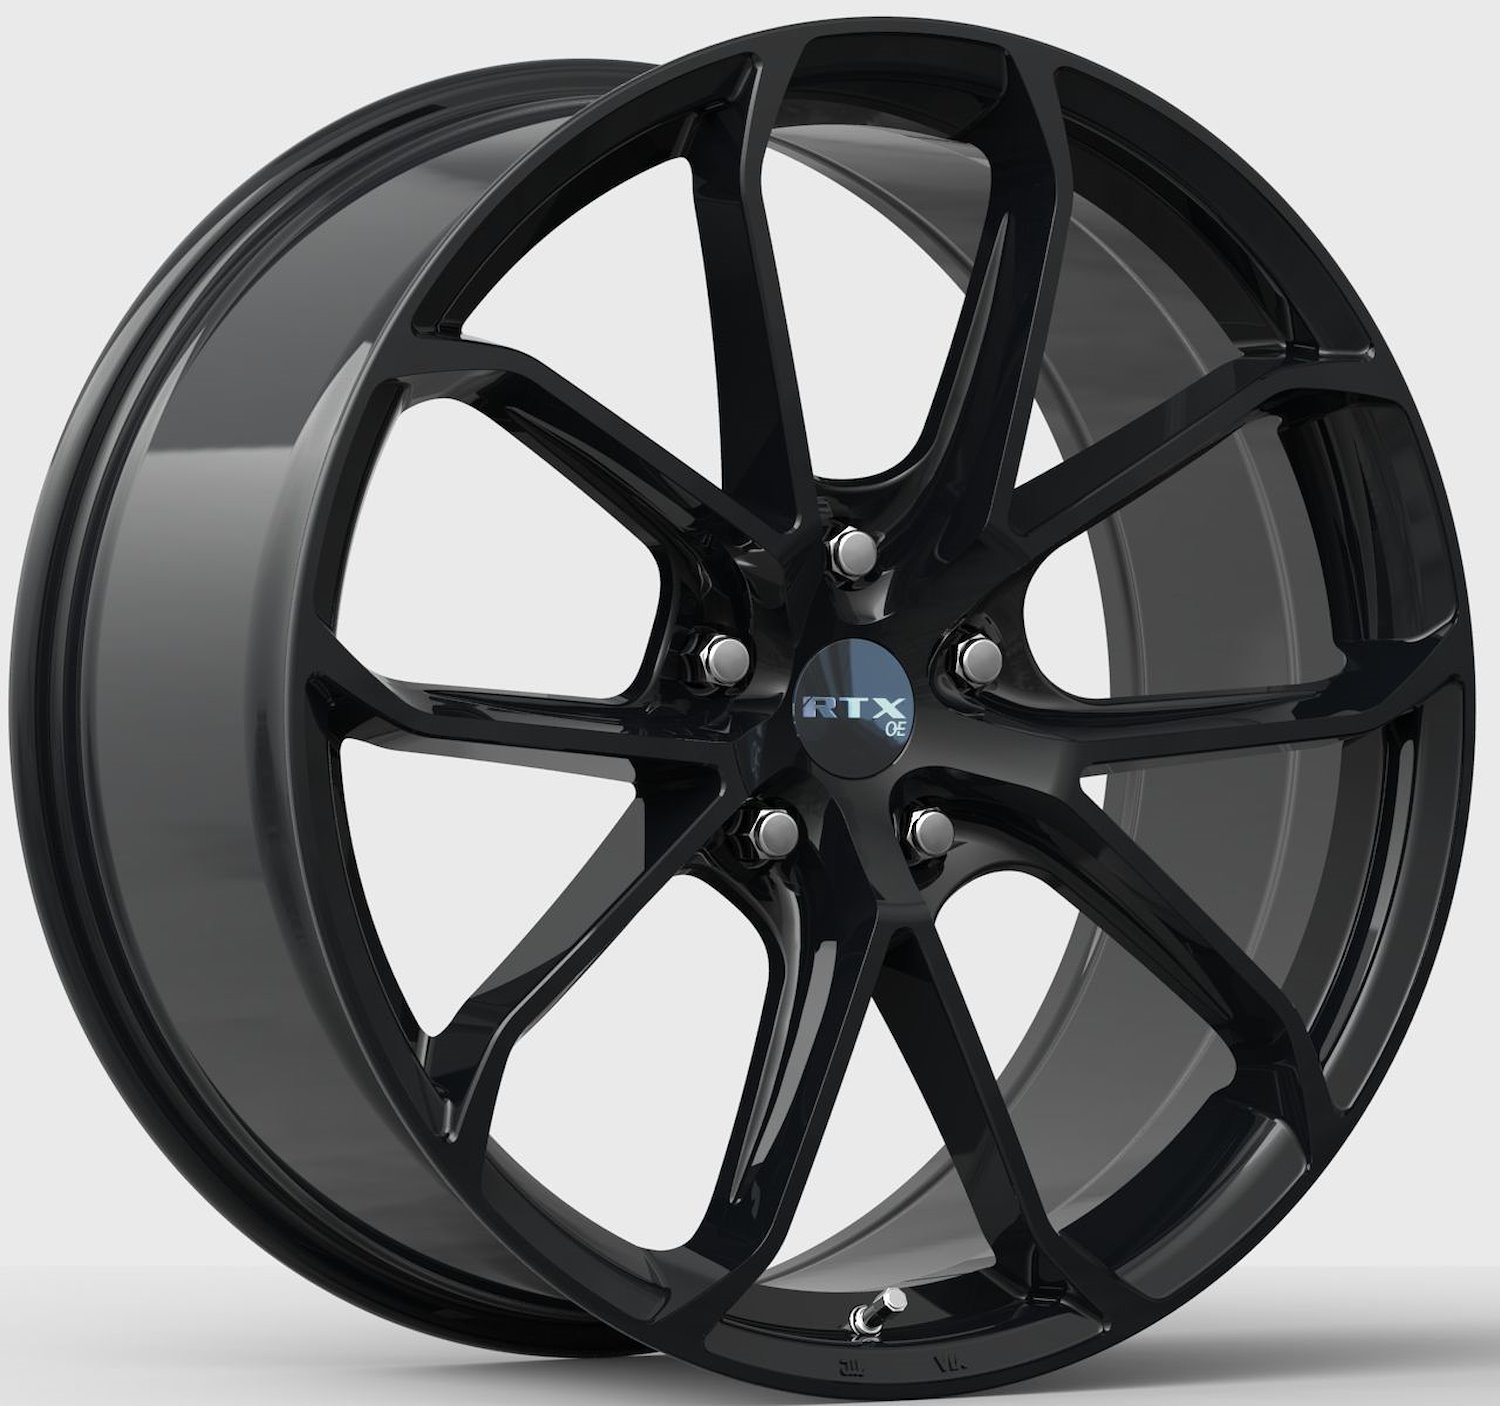 083230 OE-Series MC-01 Wheel [Size: 21" x 11"] Gloss Black Finish